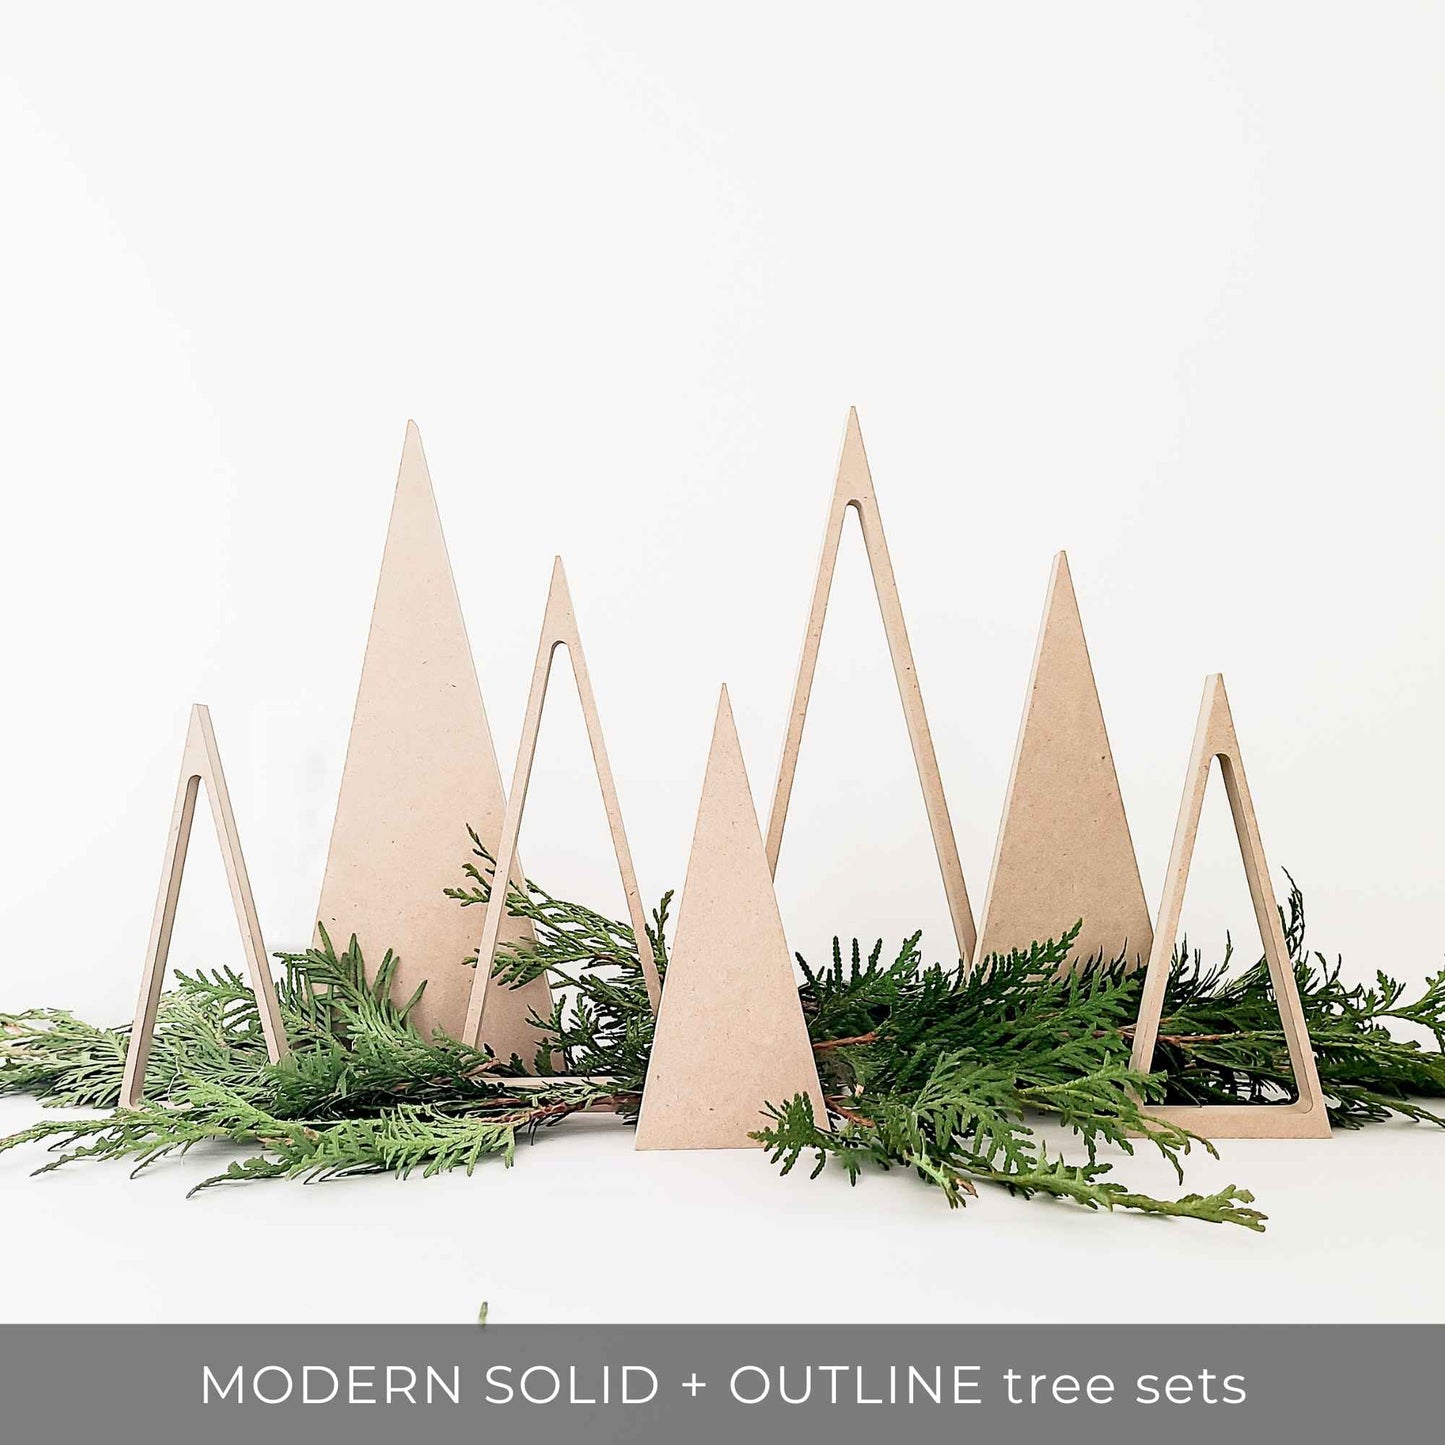 Wooden tree decor for simple Modern Christmas decor 